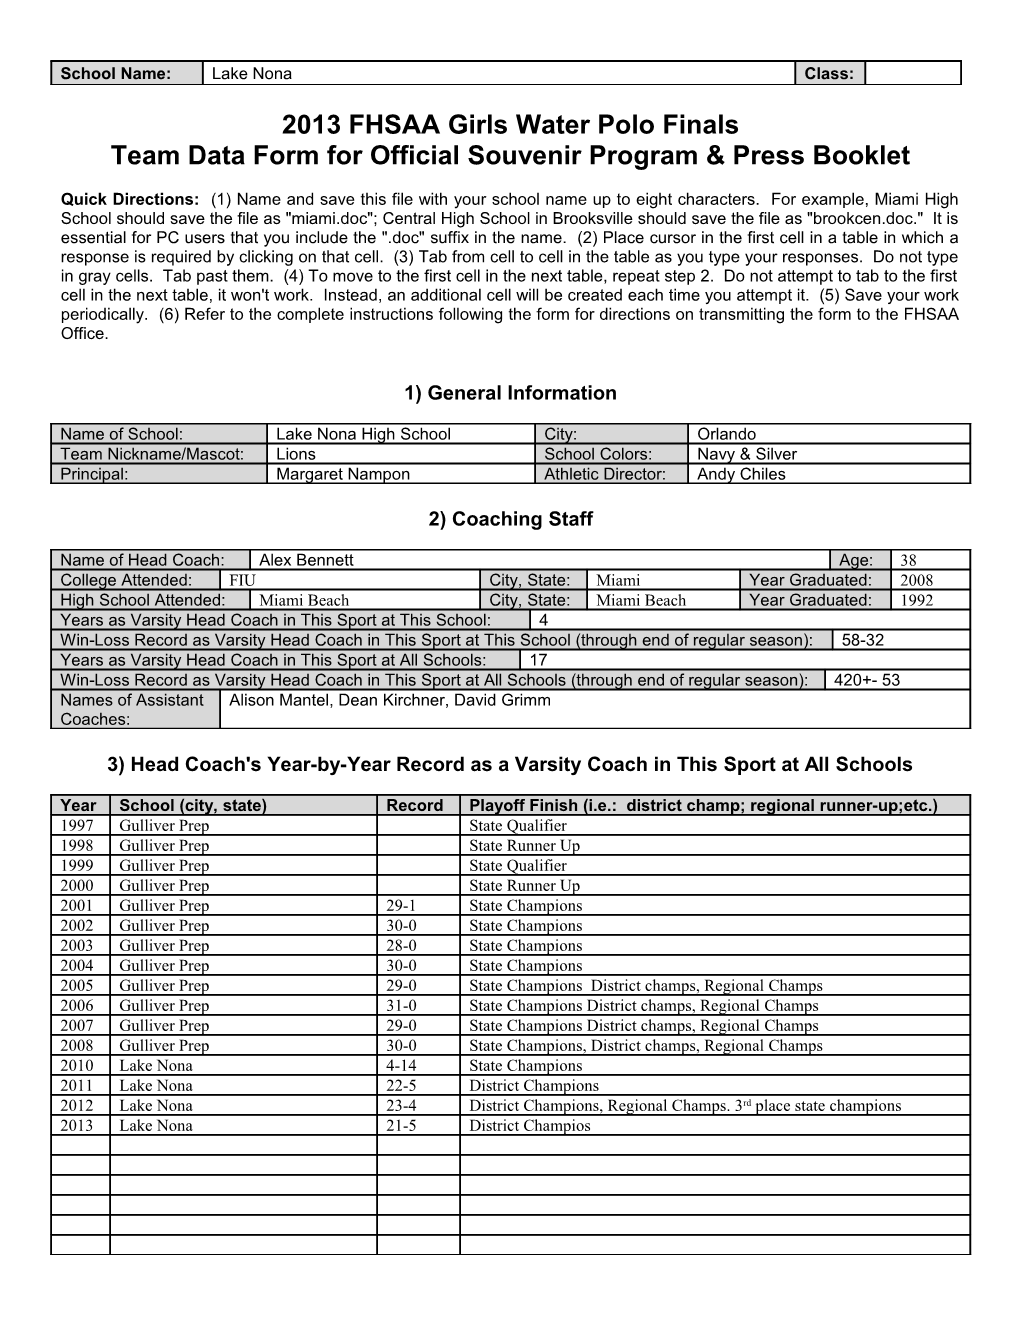 Team Data Form for Official Souvenir Program & Press Booklet s5